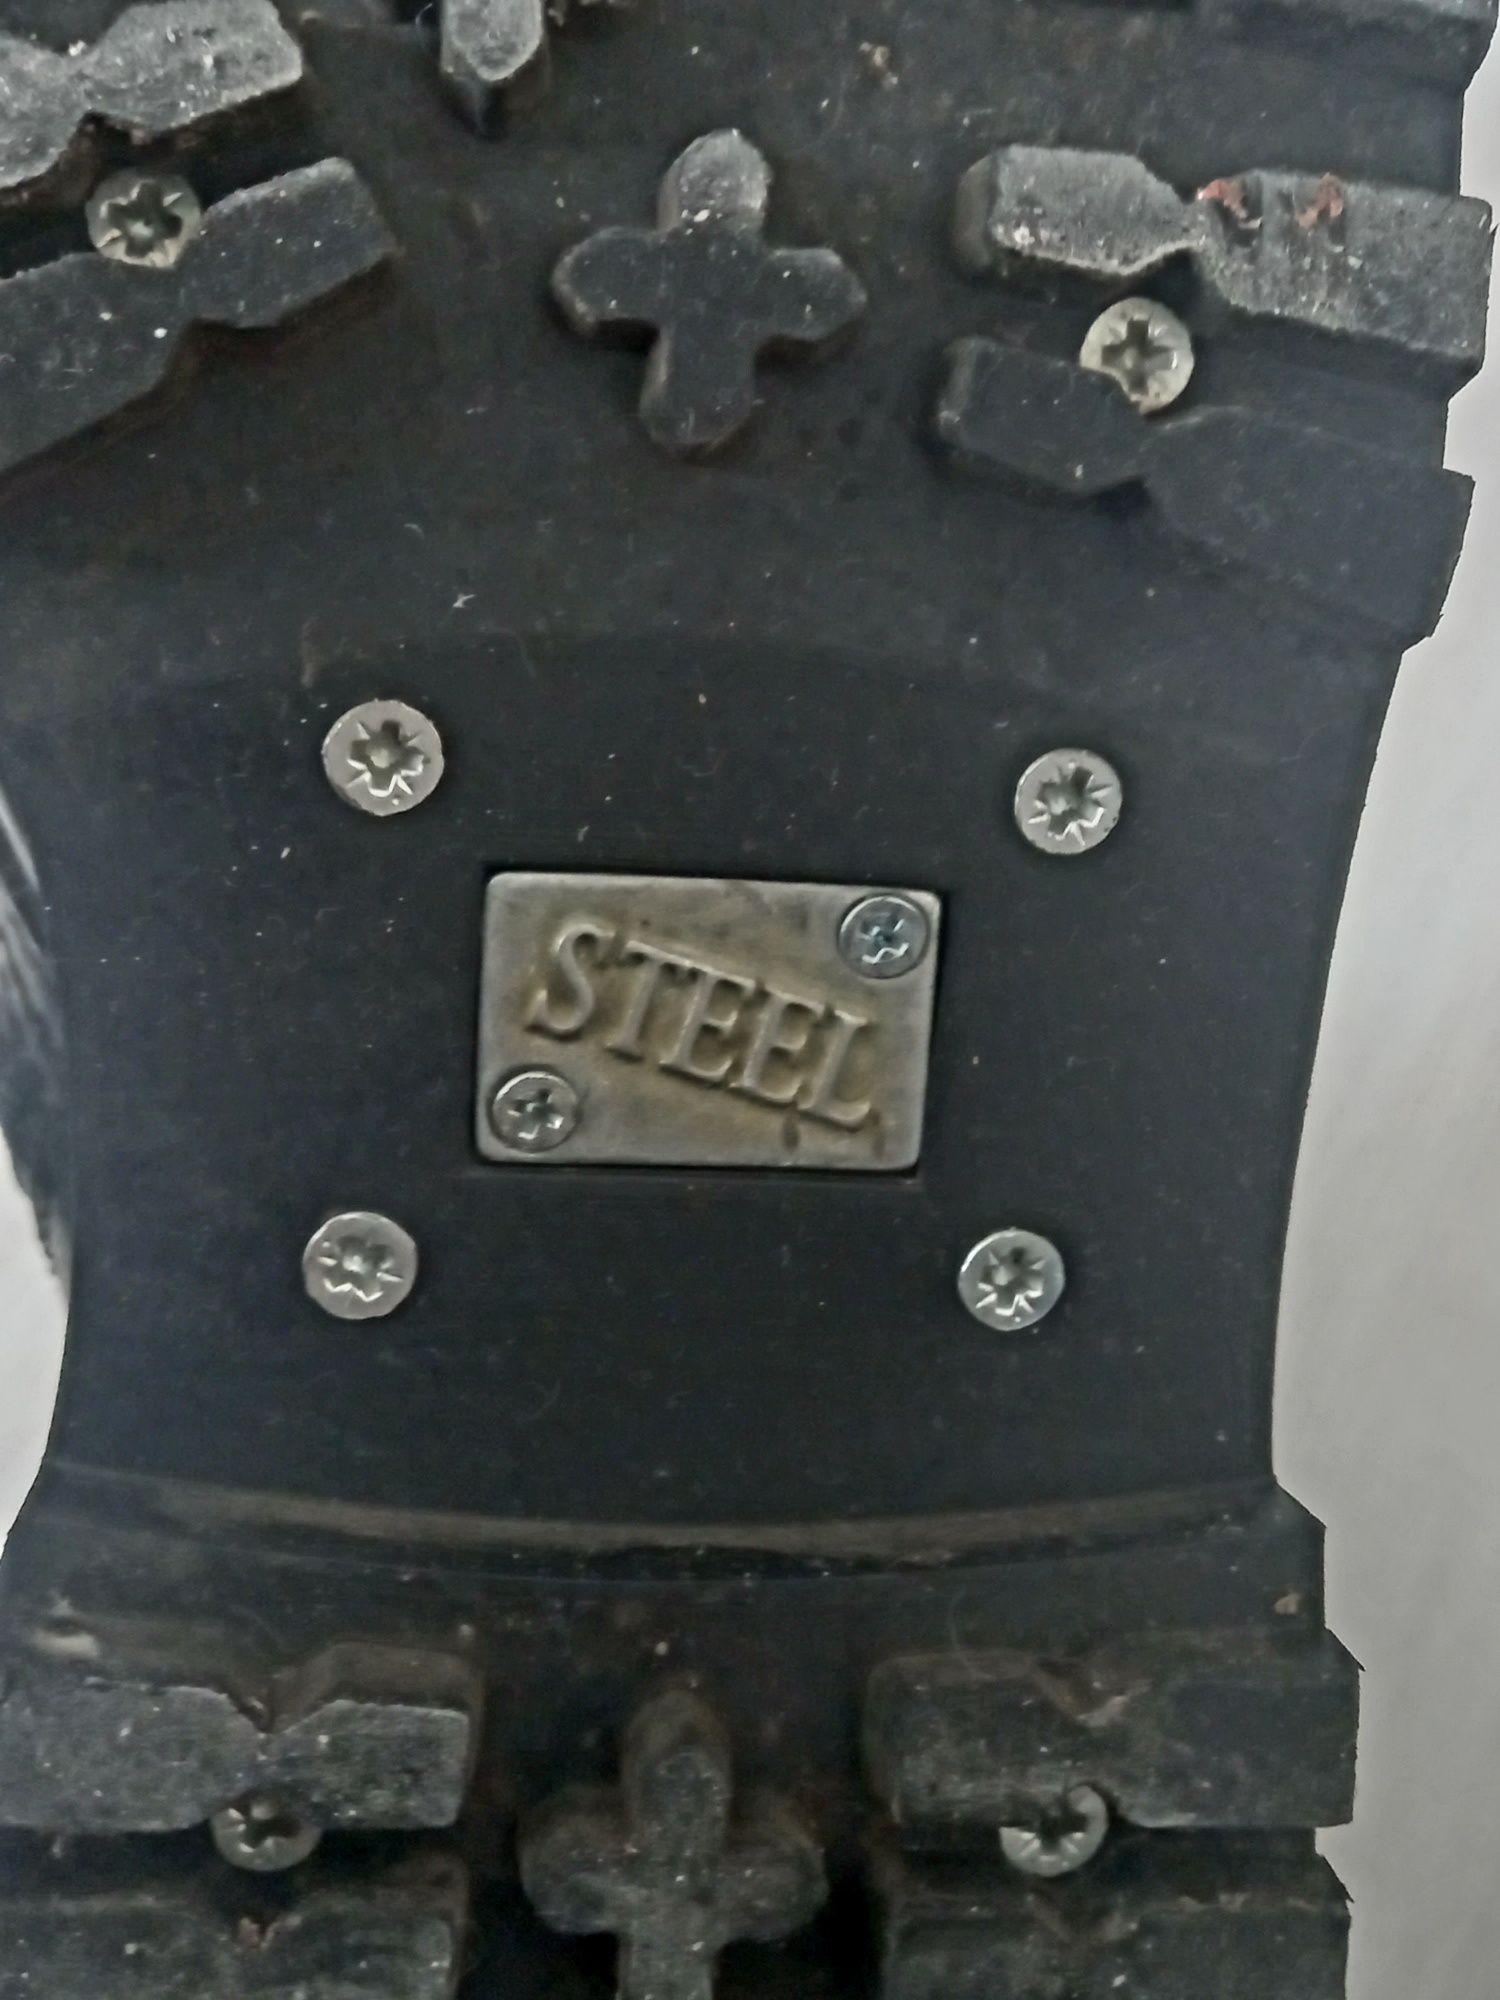 Сапоги Steel оригинал  размер 42